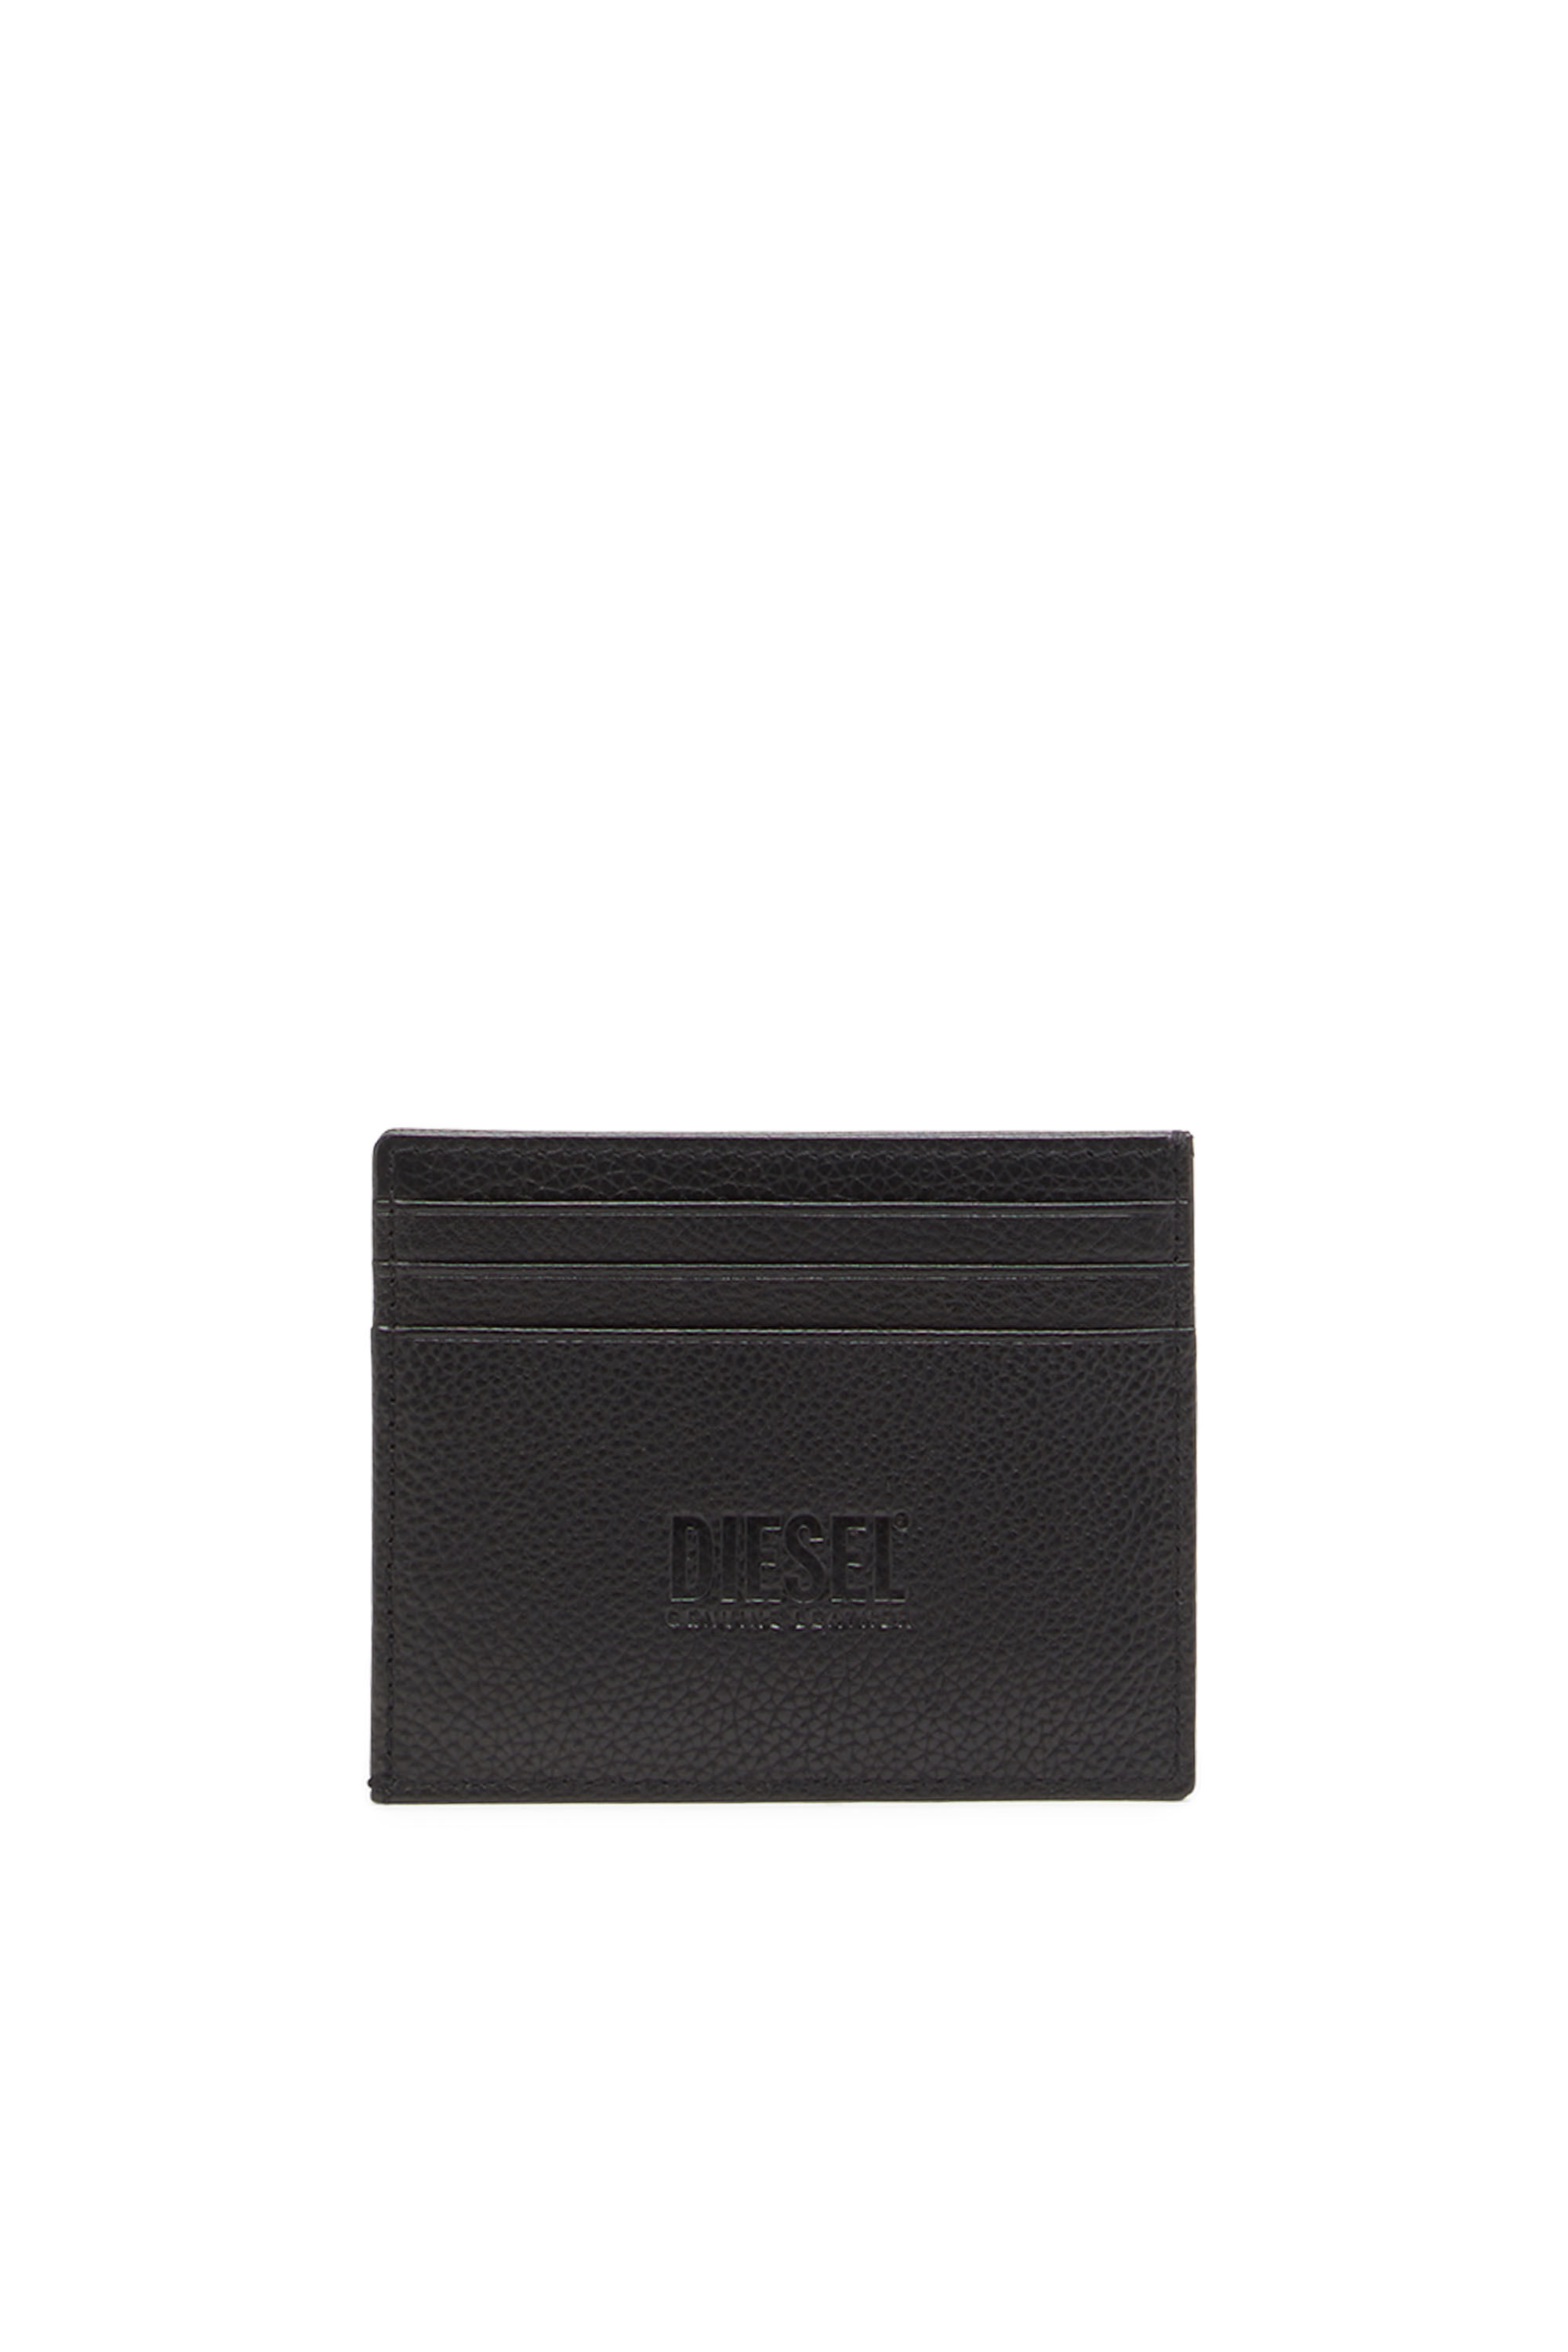 Diesel - CARD CASE, Nero - Image 2